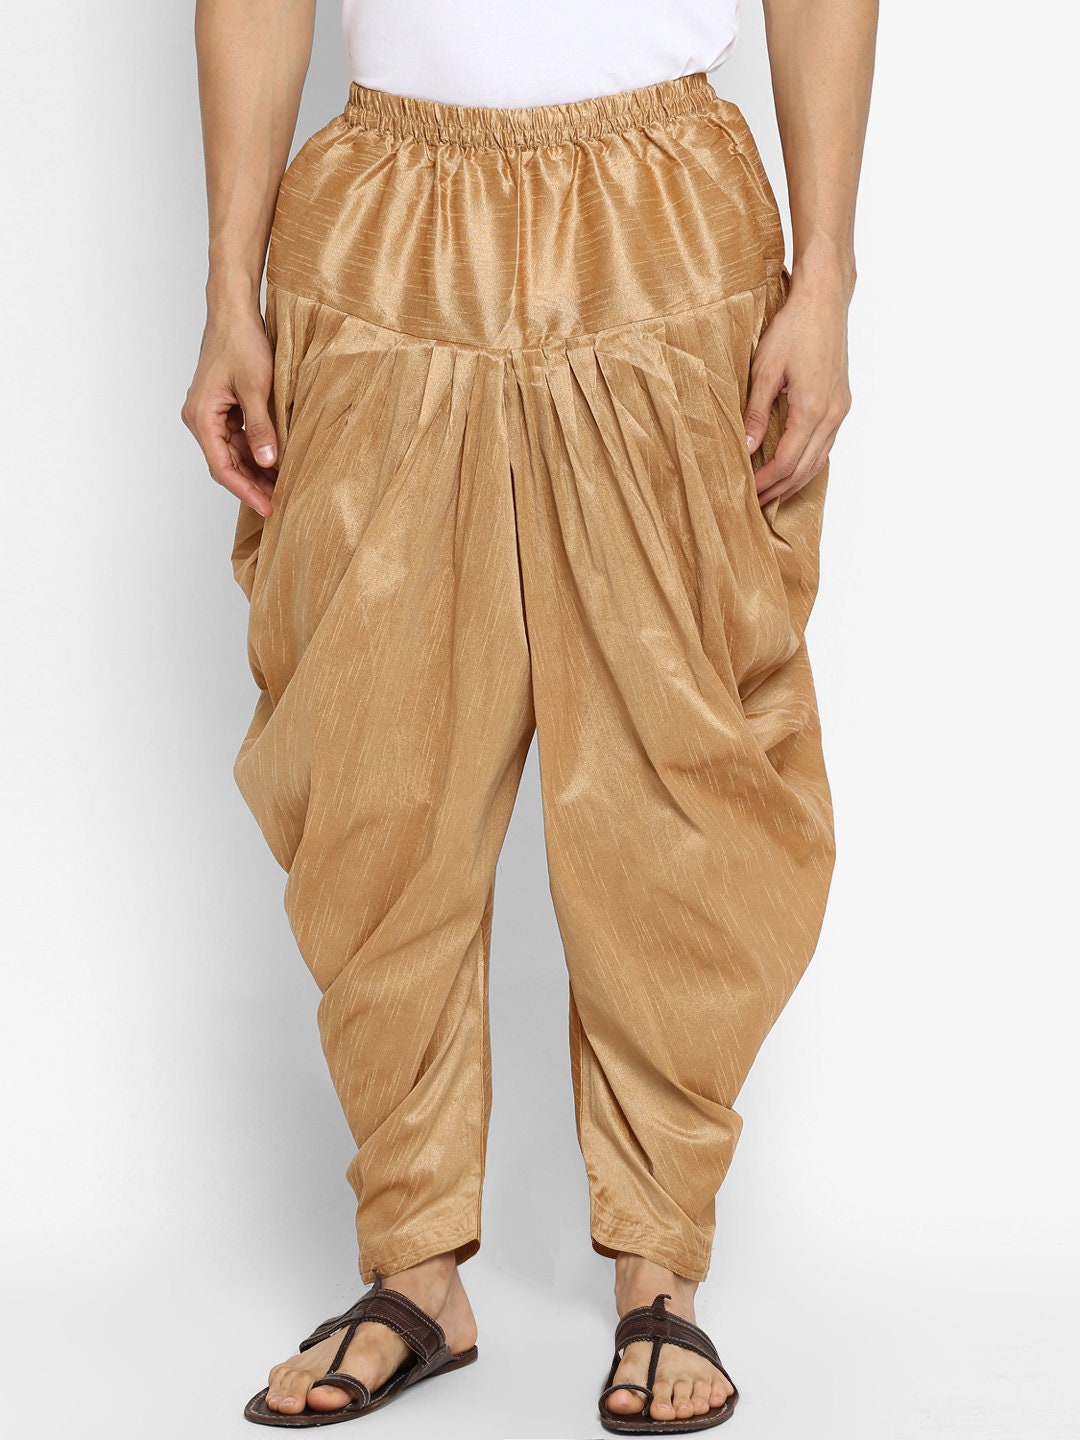 Women Gypsy Indian Boho Baggy Yoga Harem Pants Hippie Loose Palazzo Trousers  AM | eBay